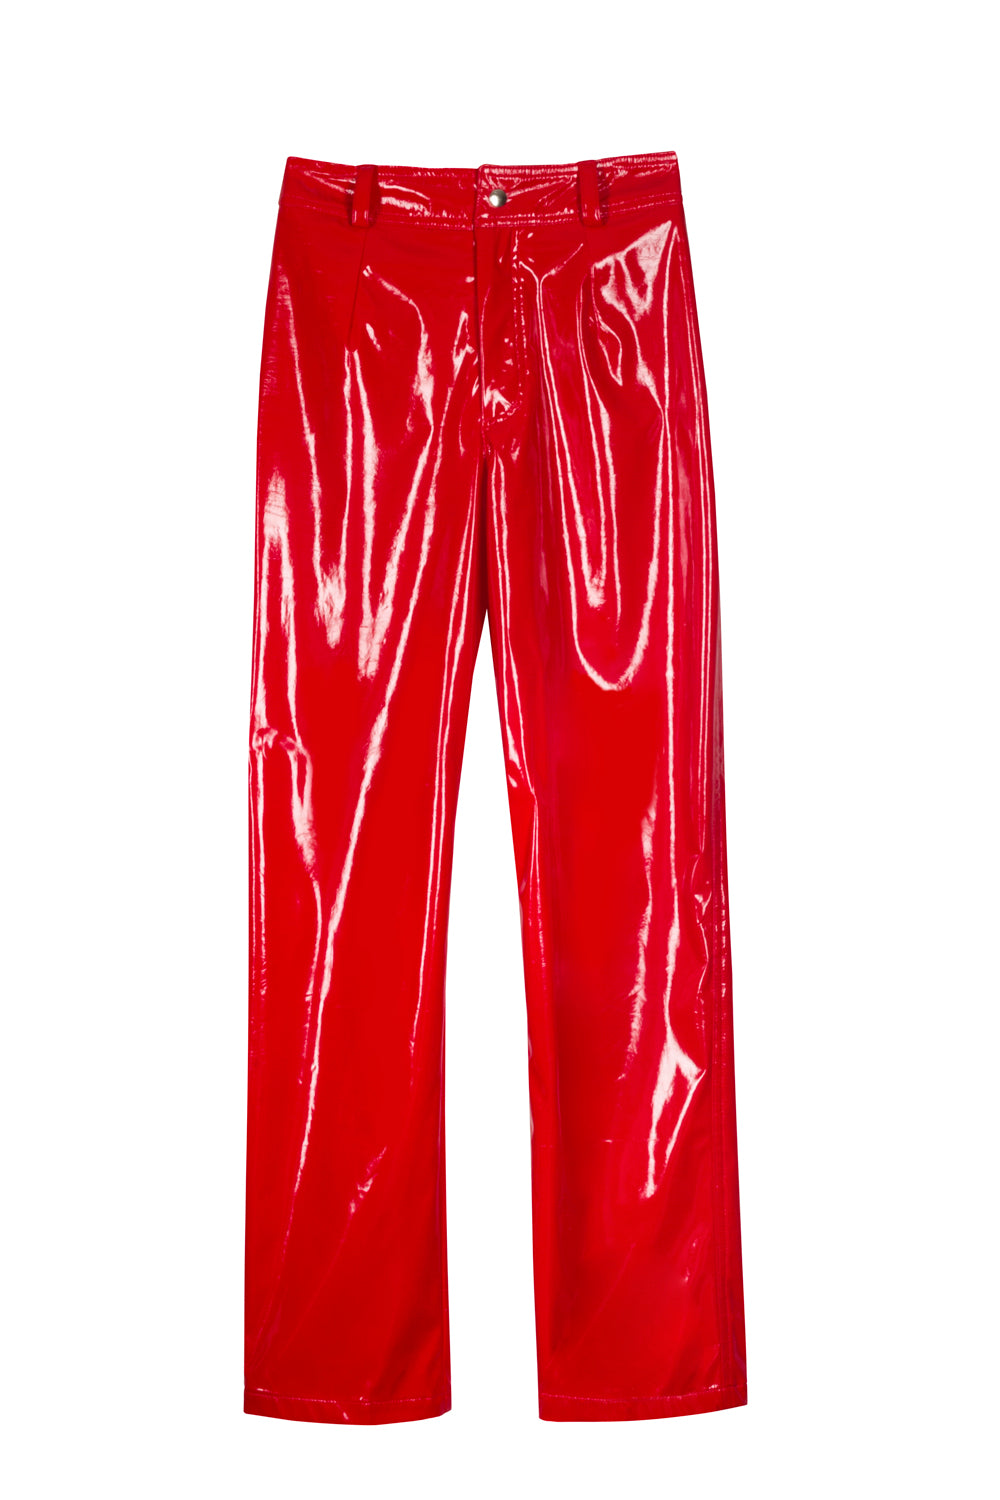 SAMPLE Plastic pants red